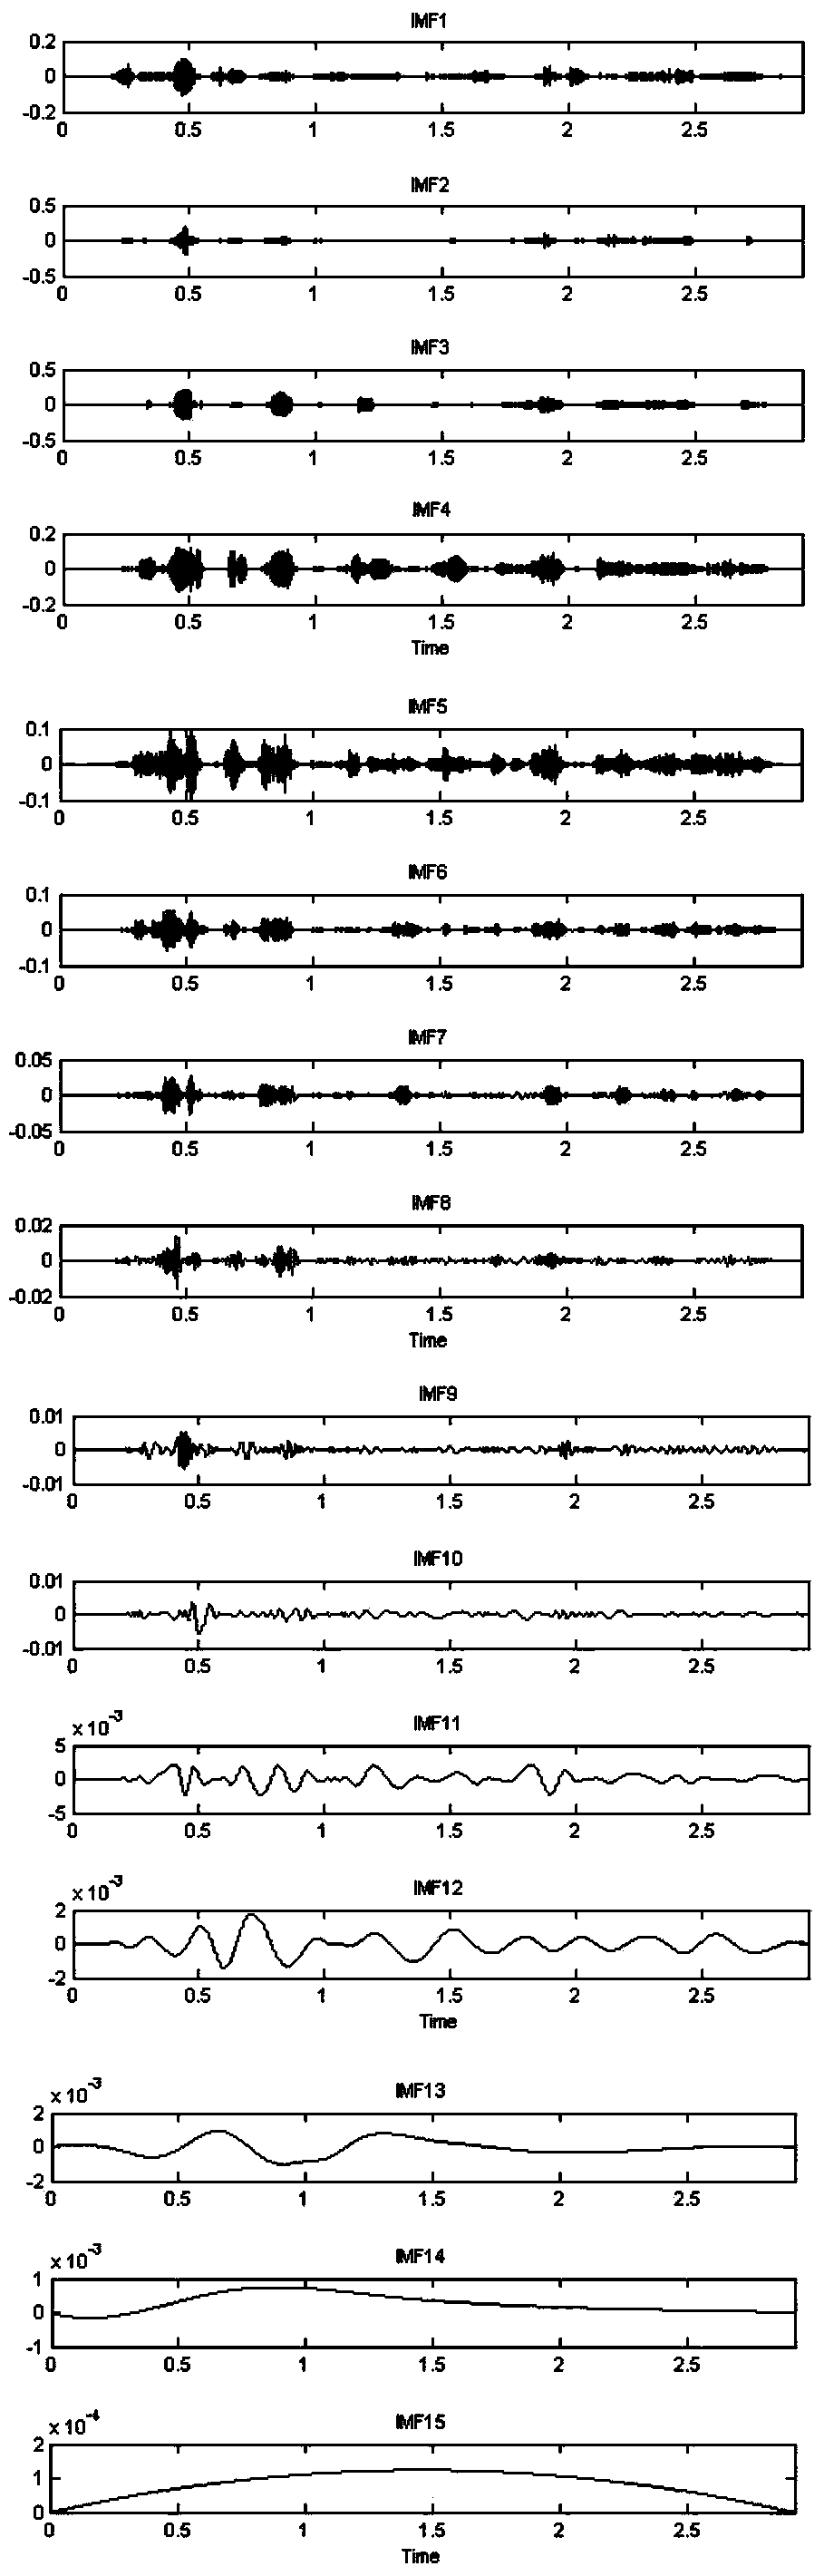 Blind source signal denoising method based on ensemble empirical mode decomposition